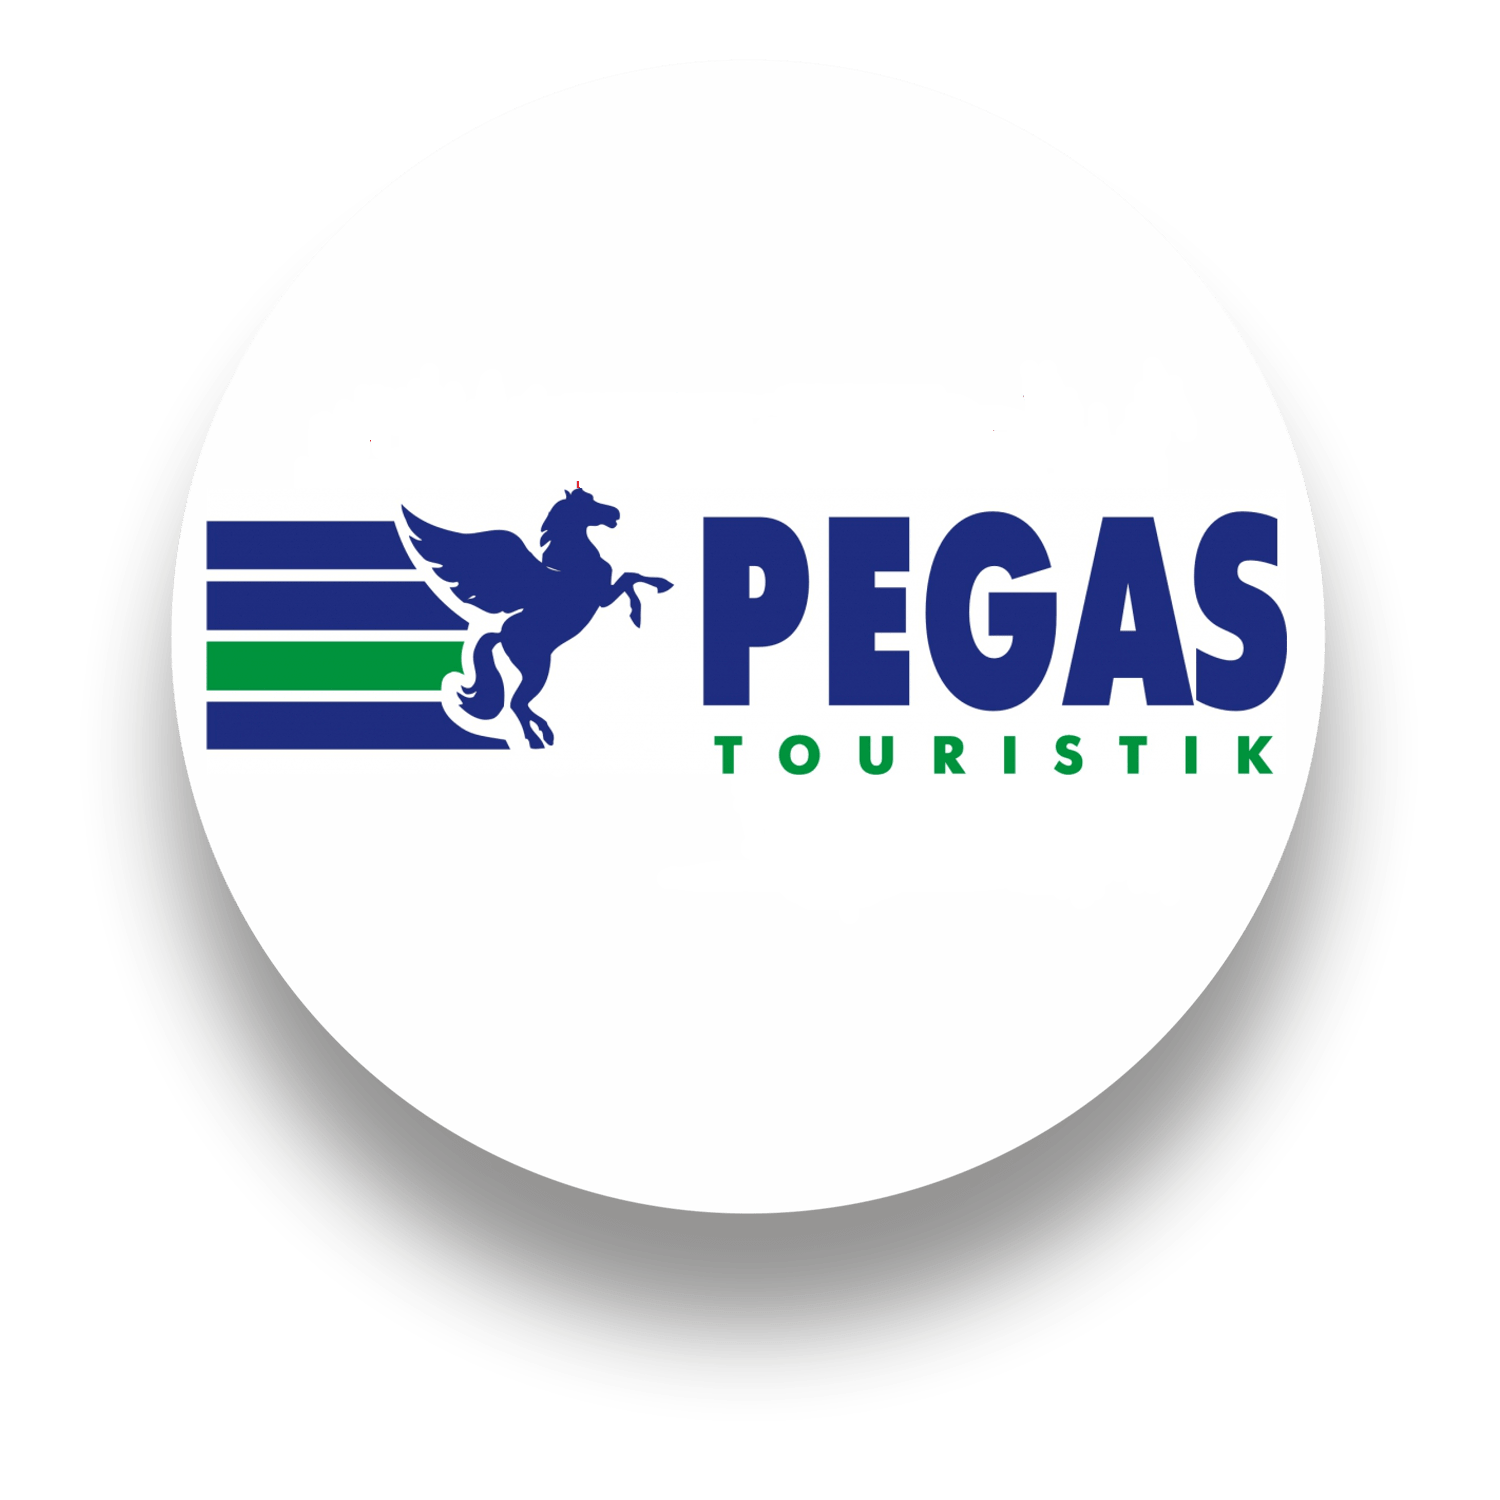 Пегас туристик иркутска сайт. Pegas логотип. Пегас Туристик лого. Турфирма Пегас. Туристическая фирма Пегас.